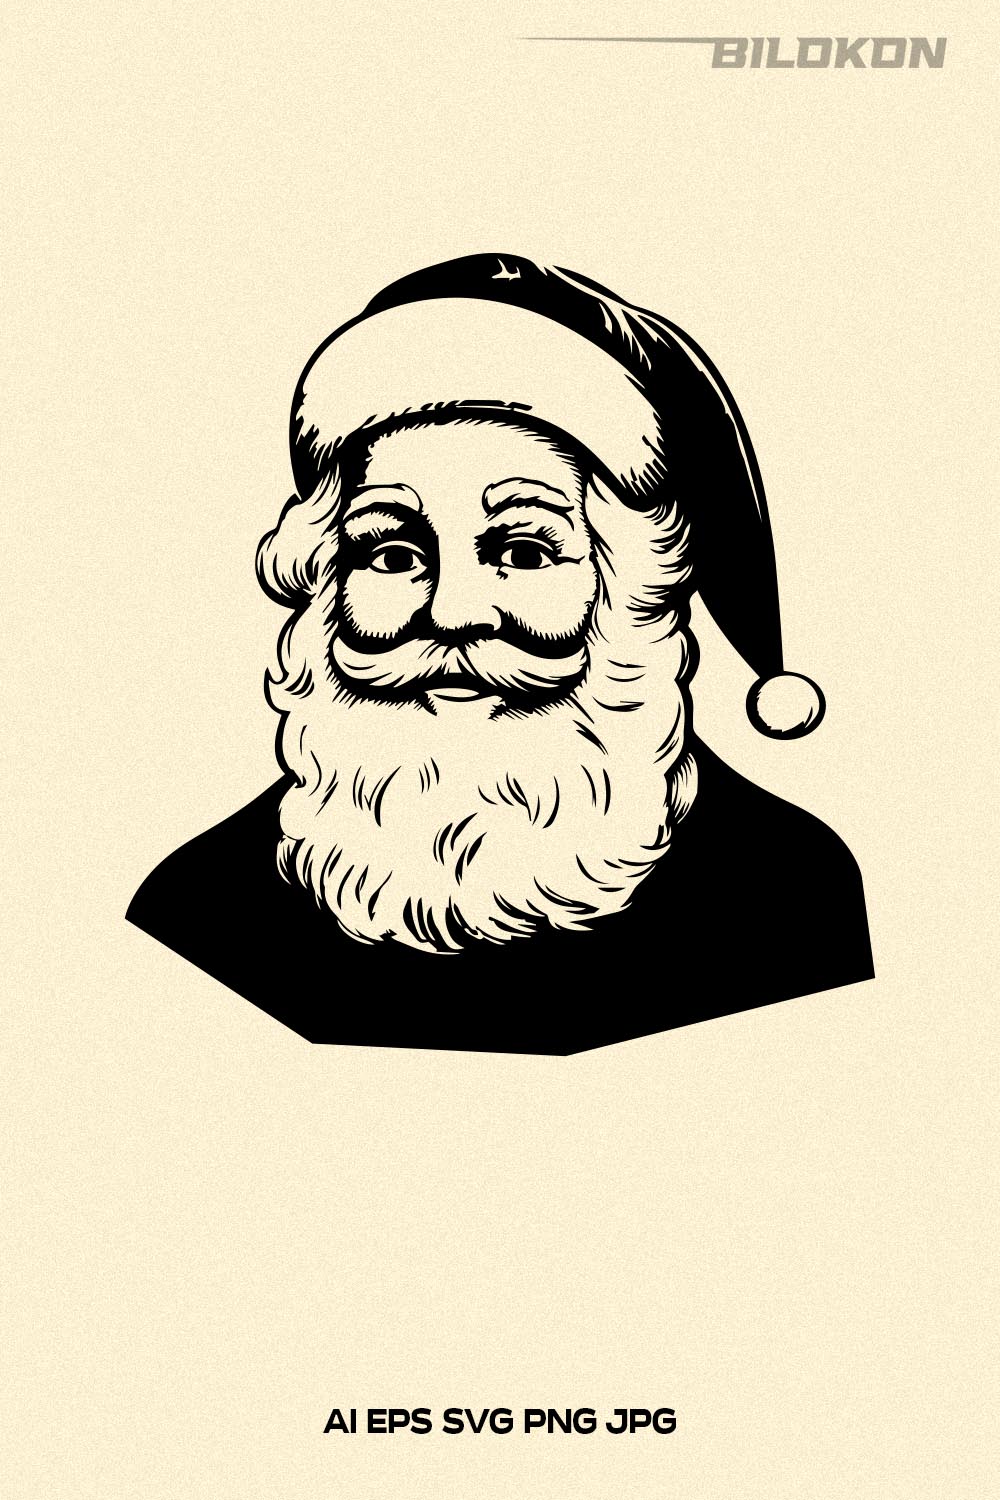 Retro Santa Claus, Santa Claus head SVG Vector pinterest preview image.